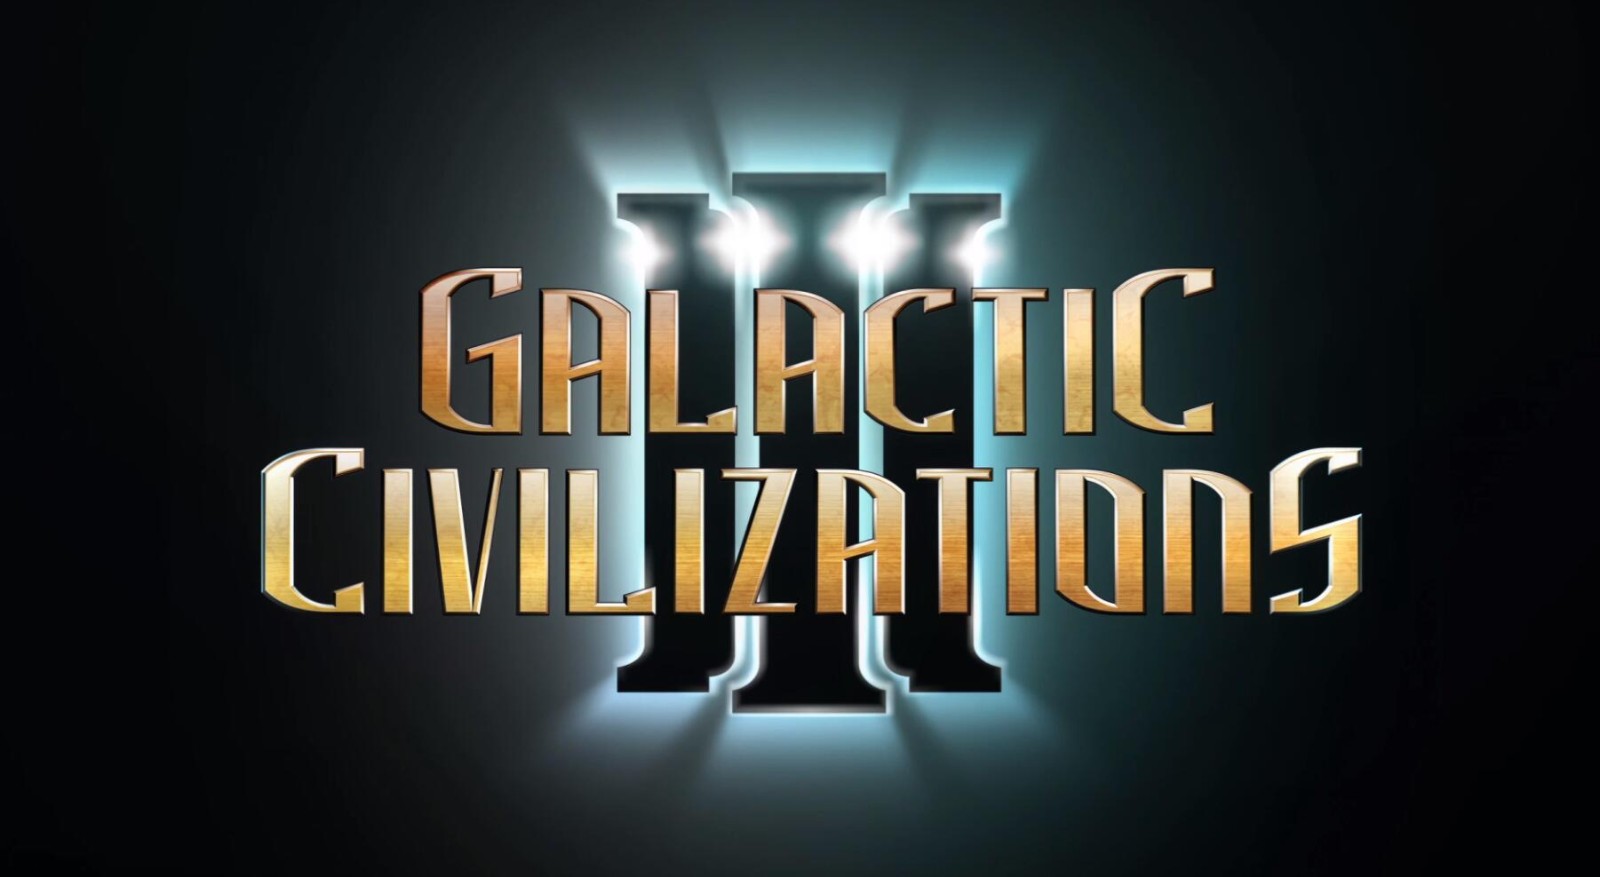 Epic每周喜加一更新免費領取《銀河文明3》